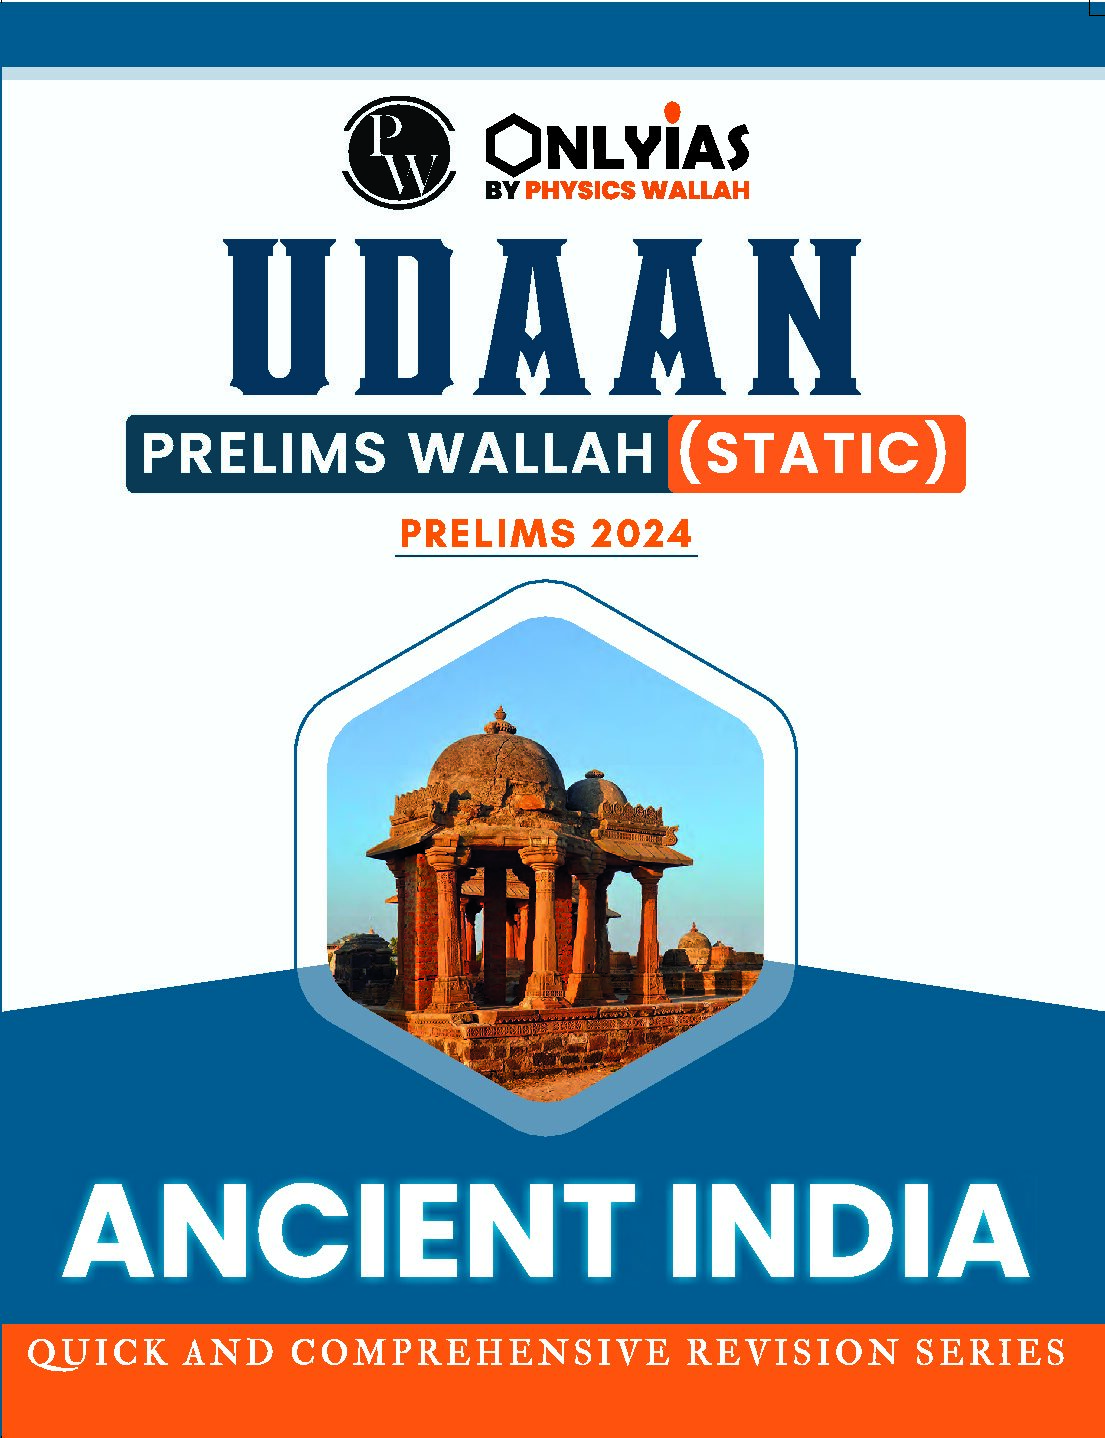 Manufacturer, Exporter, Importer, Supplier, Wholesaler, Retailer, Trader of Onlyias UDAAN Prelims Wallah (Static) 2024 Ancient India English Medium (Black & White) in New Delhi, Delhi, India.